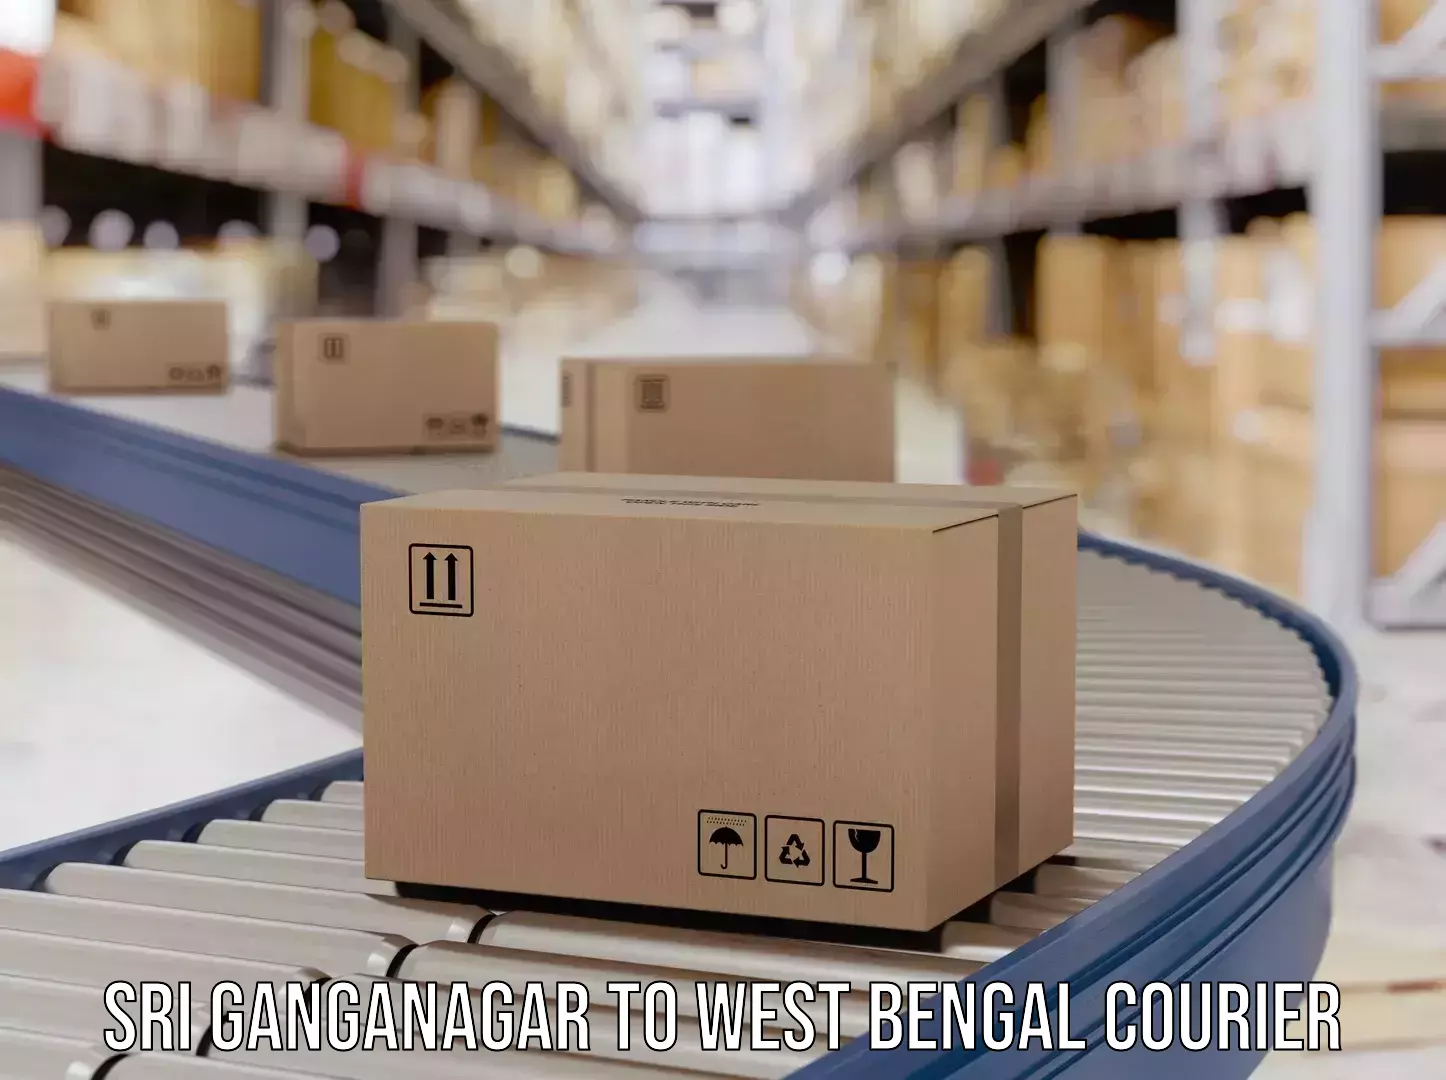 Doorstep delivery service Sri Ganganagar to West Bengal